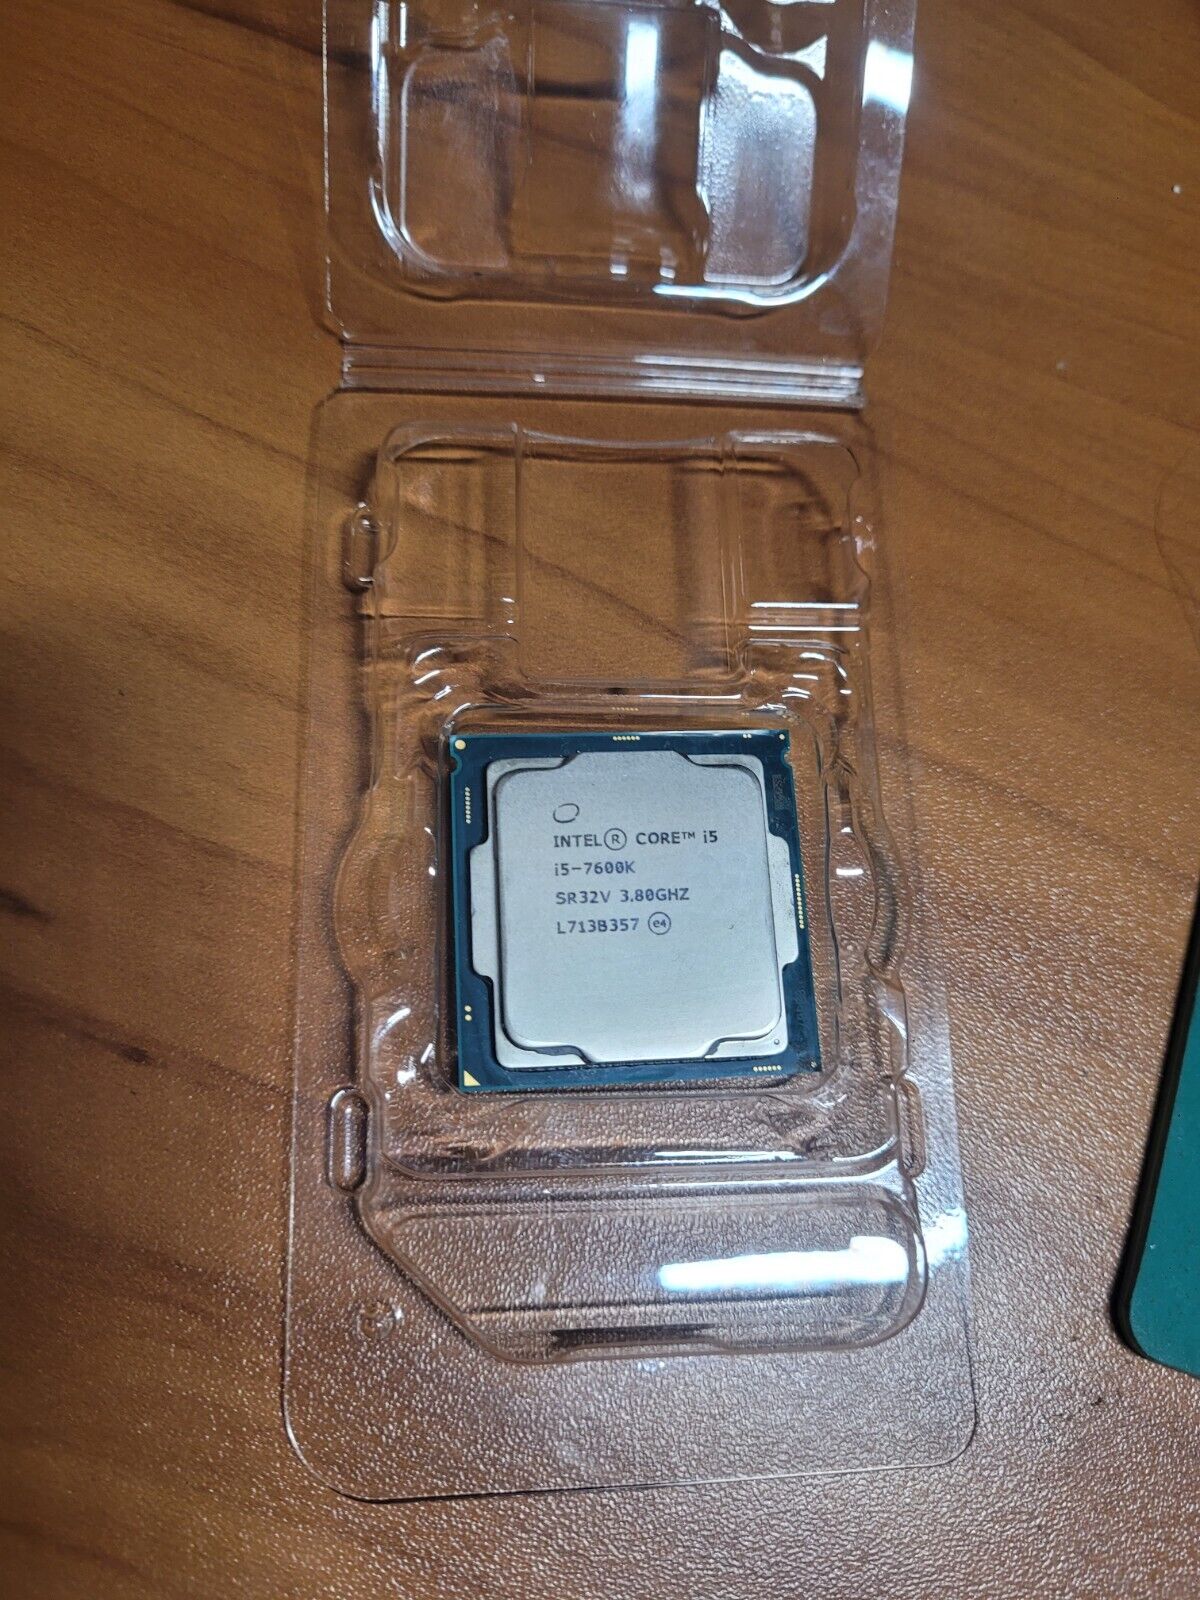 Intel Core i5-7600K 3.8 GHz Quad-Core (BX80677I57600K) Processor